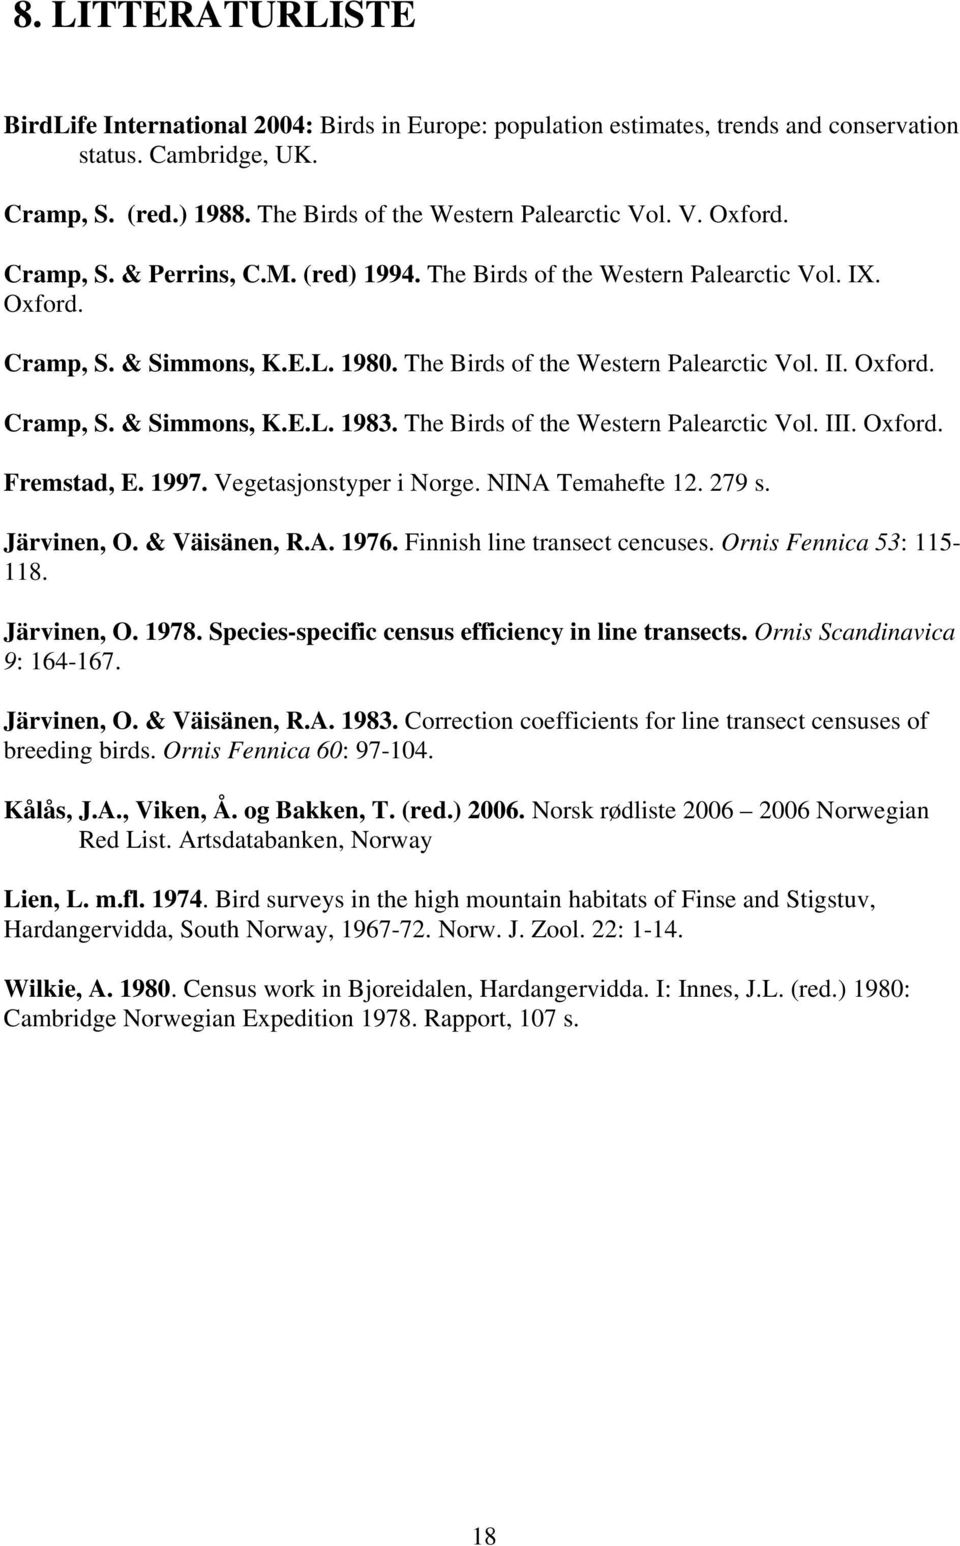 The Birds of the Western Palearctic Vol. III. Oxford. Fremstad, E. 1997. Vegetasjonstyper i Norge. NINA Temahefte 12. 279 s. Järvinen, O. & Väisänen, R.A. 1976. Finnish line transect cencuses.